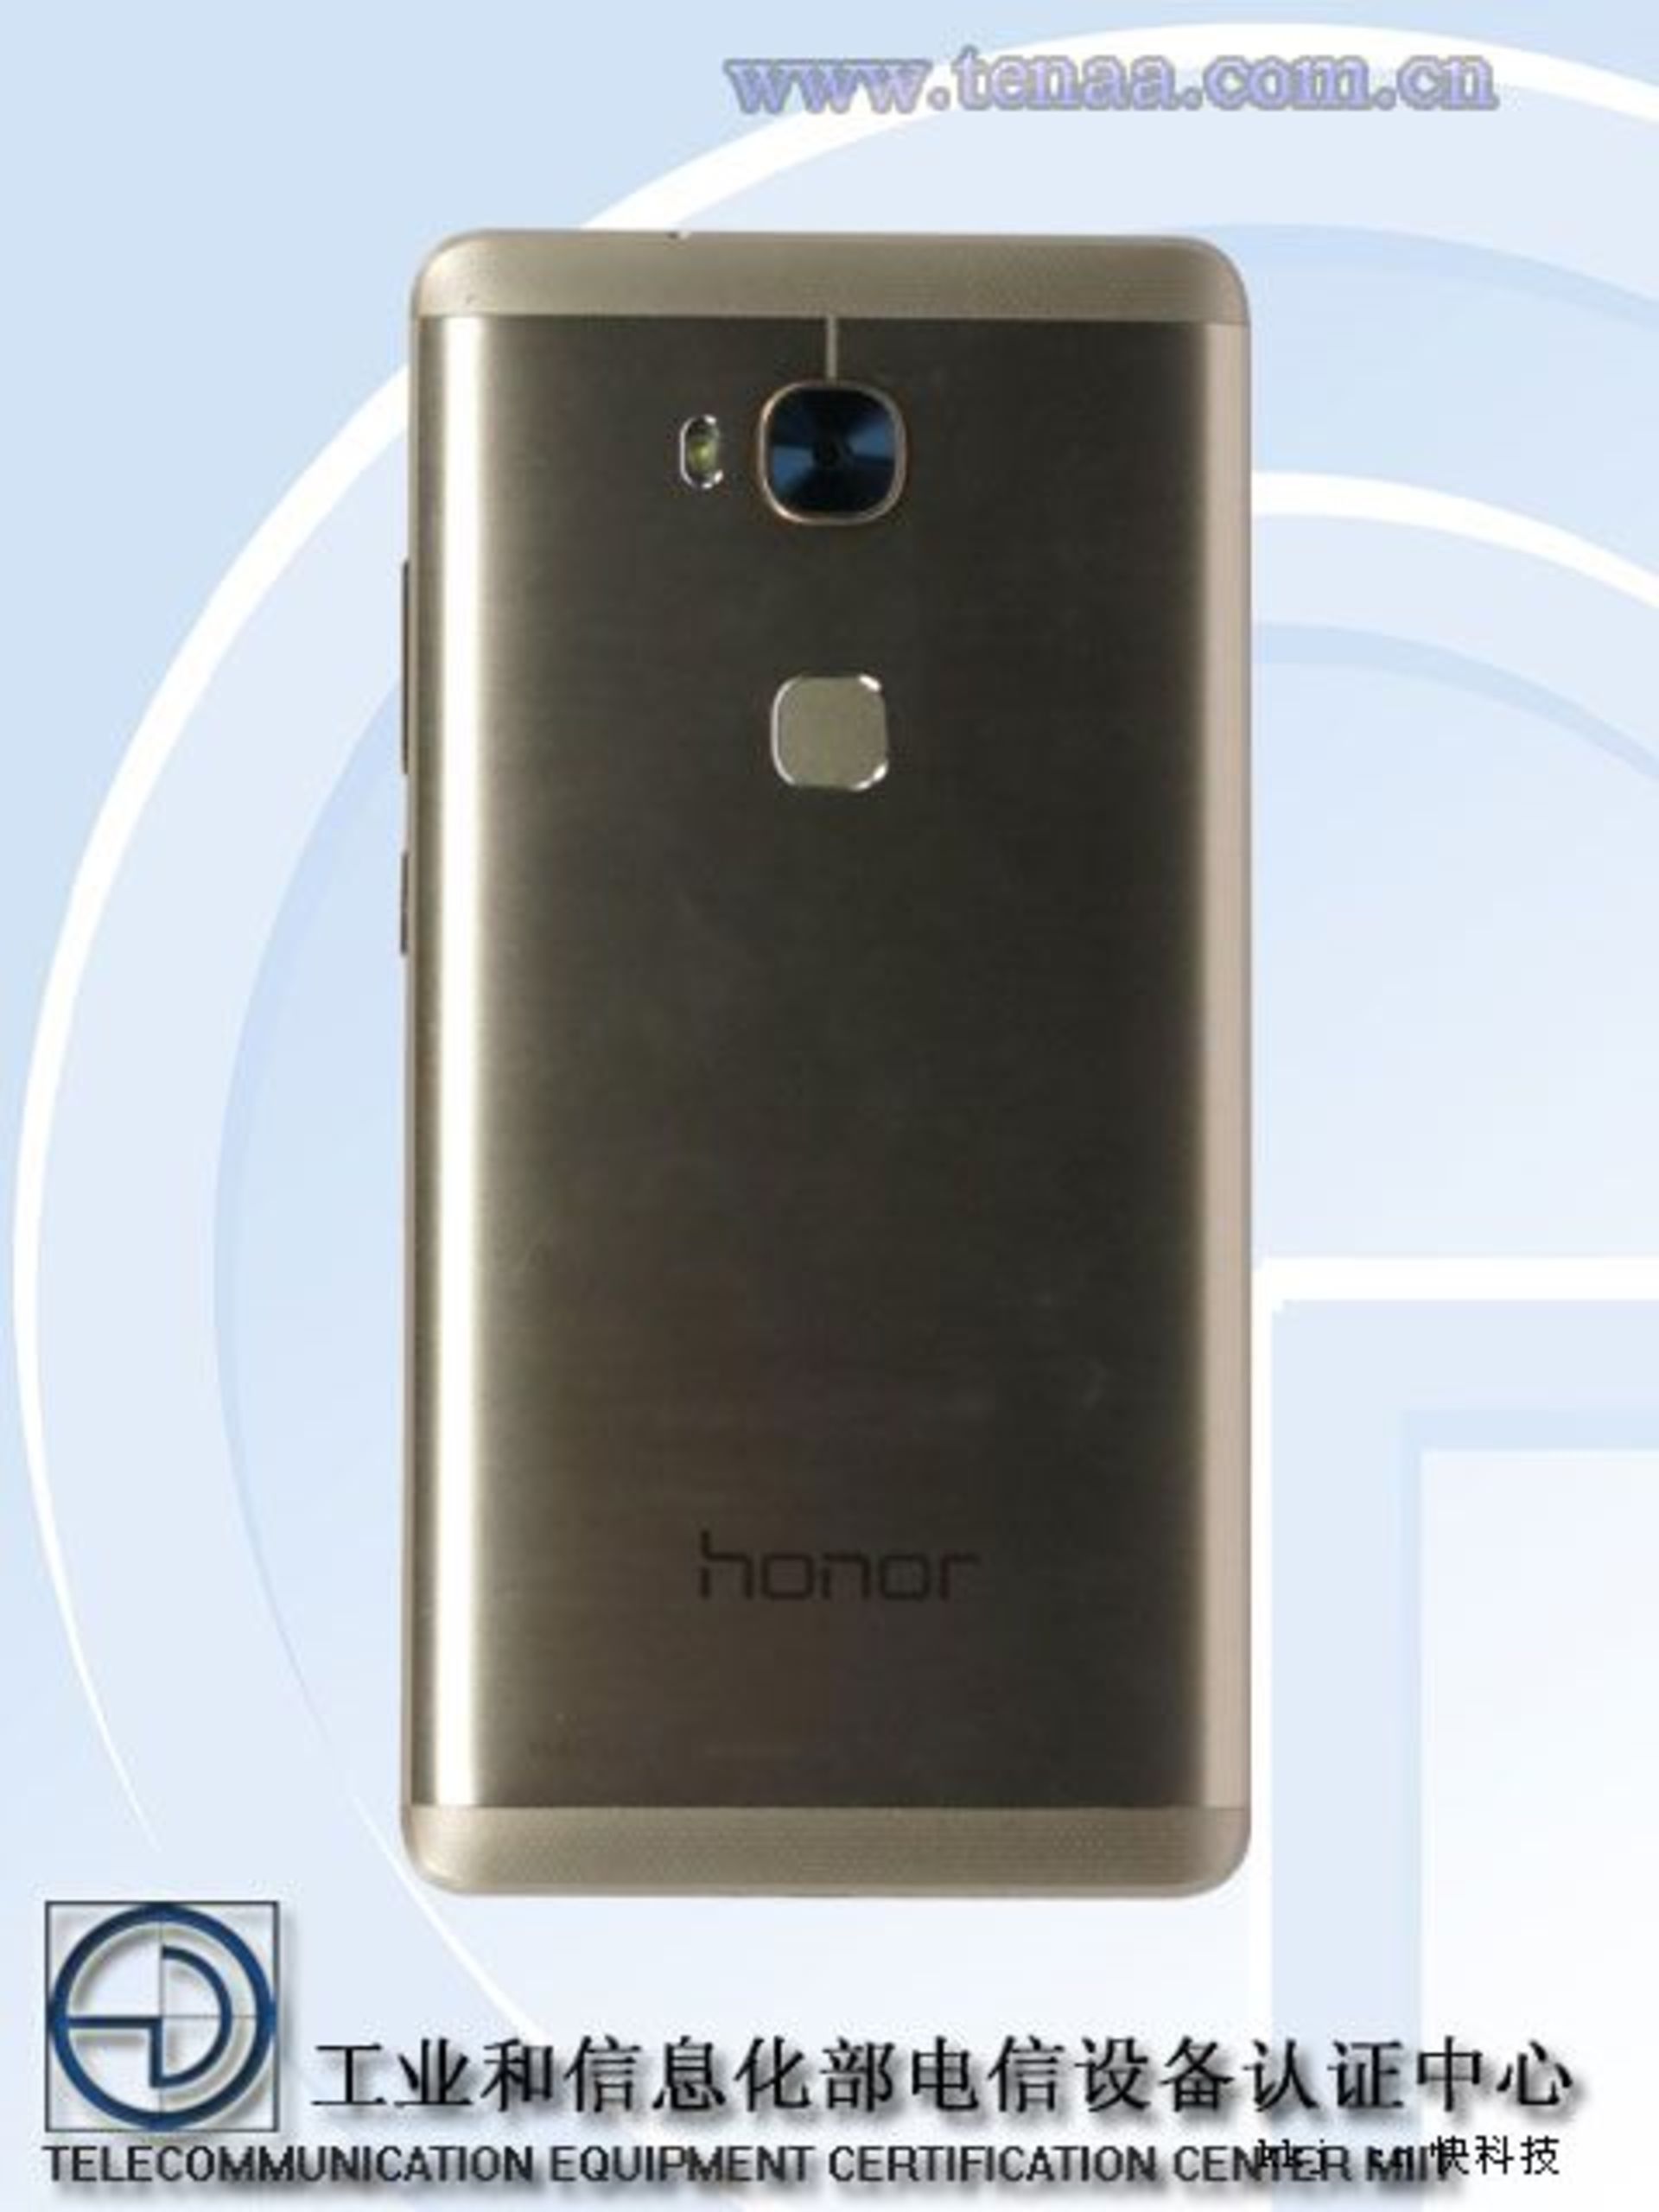 Huawei Honor 5X TENAA 9